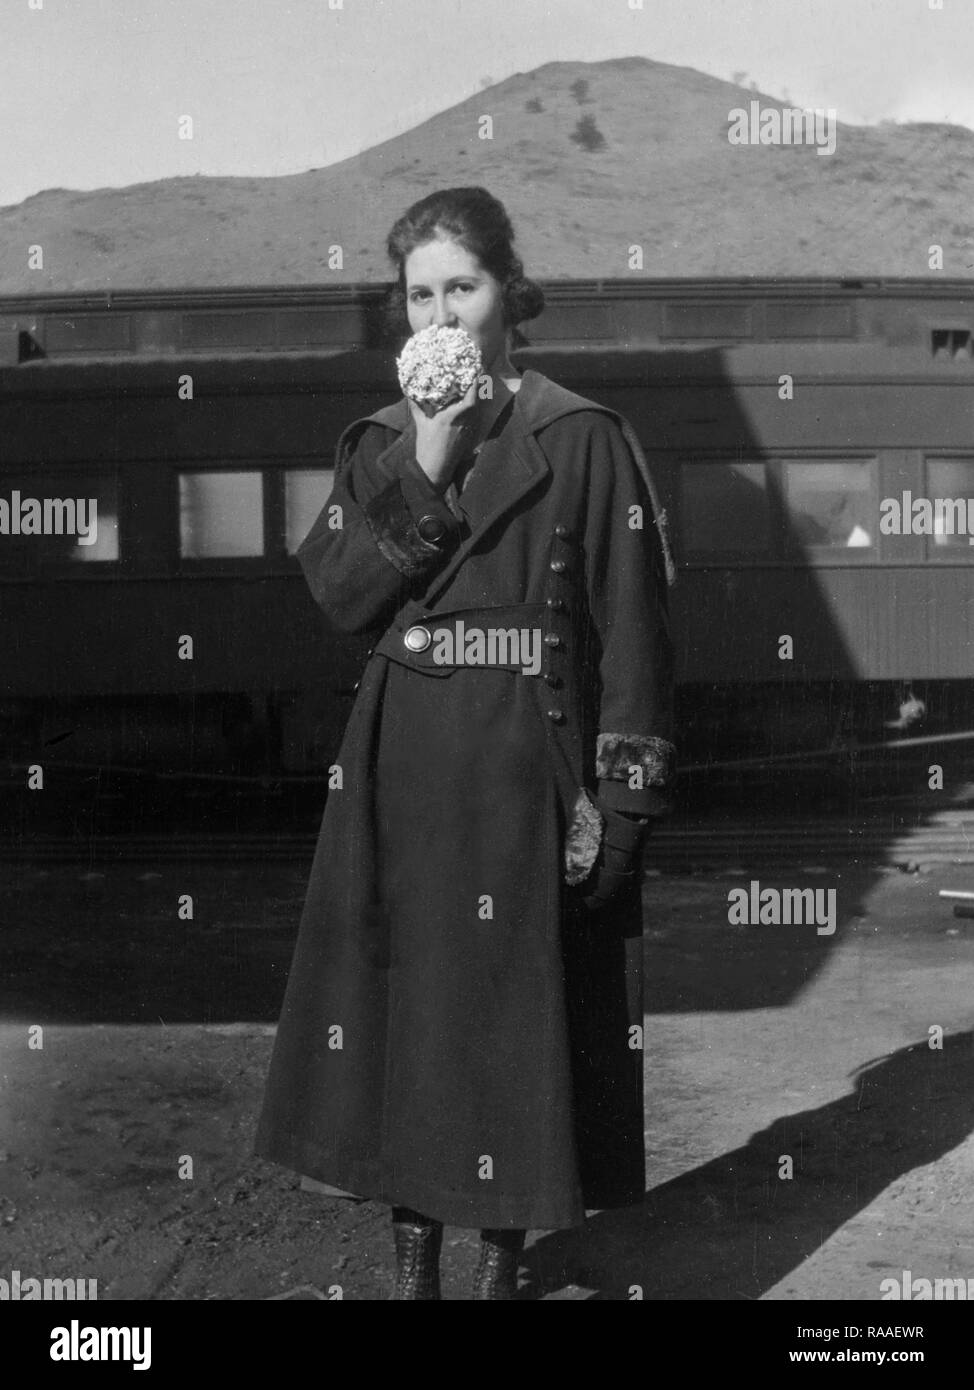 A young woman enjoys a popcorn ball on a Colorado train platform, ca. 1925. Stock Photo